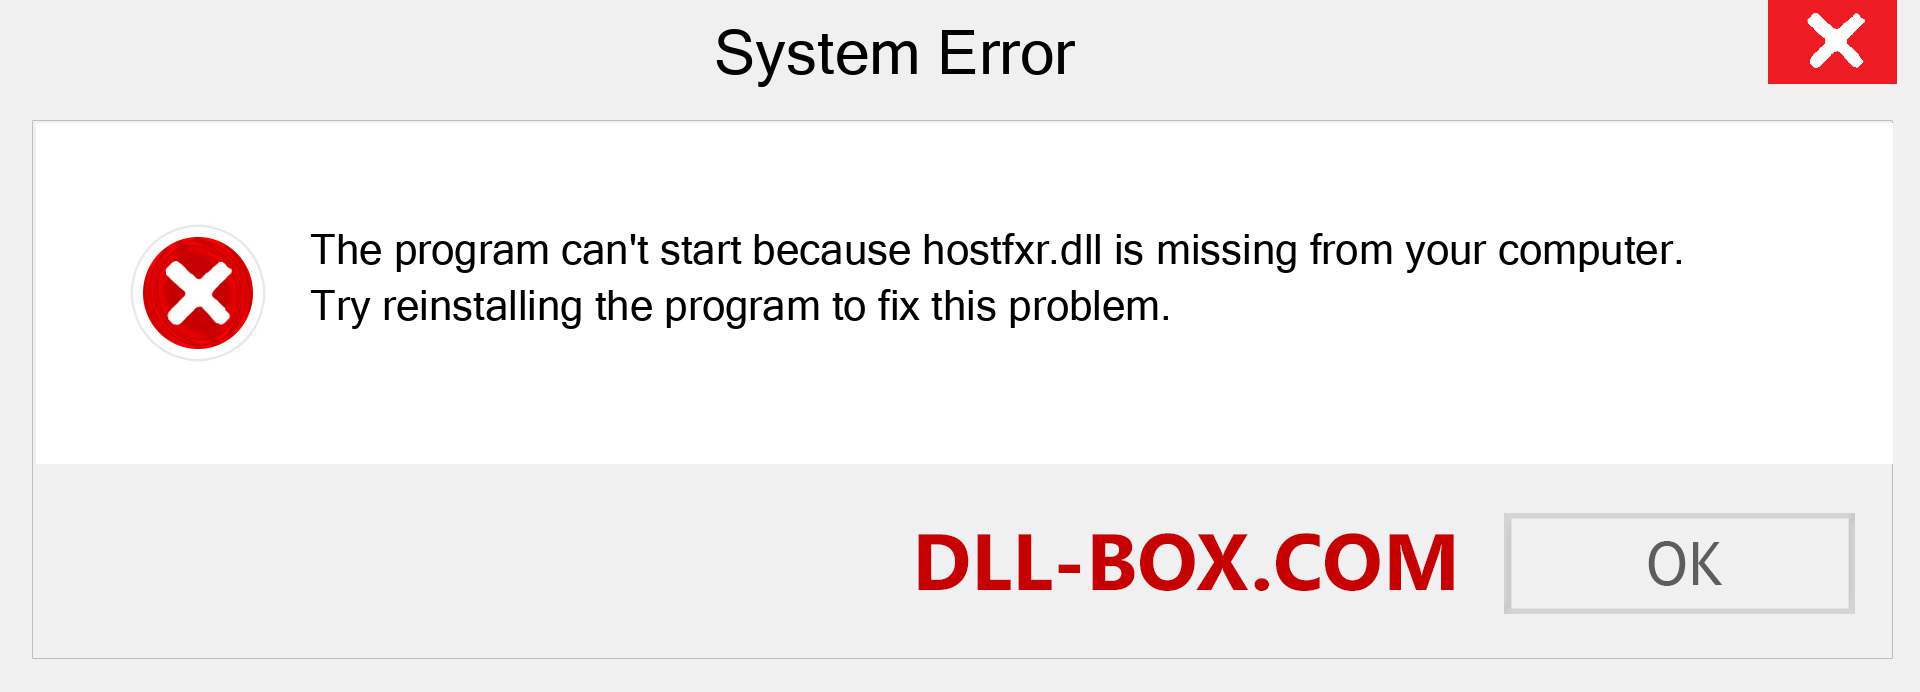  hostfxr.dll file is missing?. Download for Windows 7, 8, 10 - Fix  hostfxr dll Missing Error on Windows, photos, images